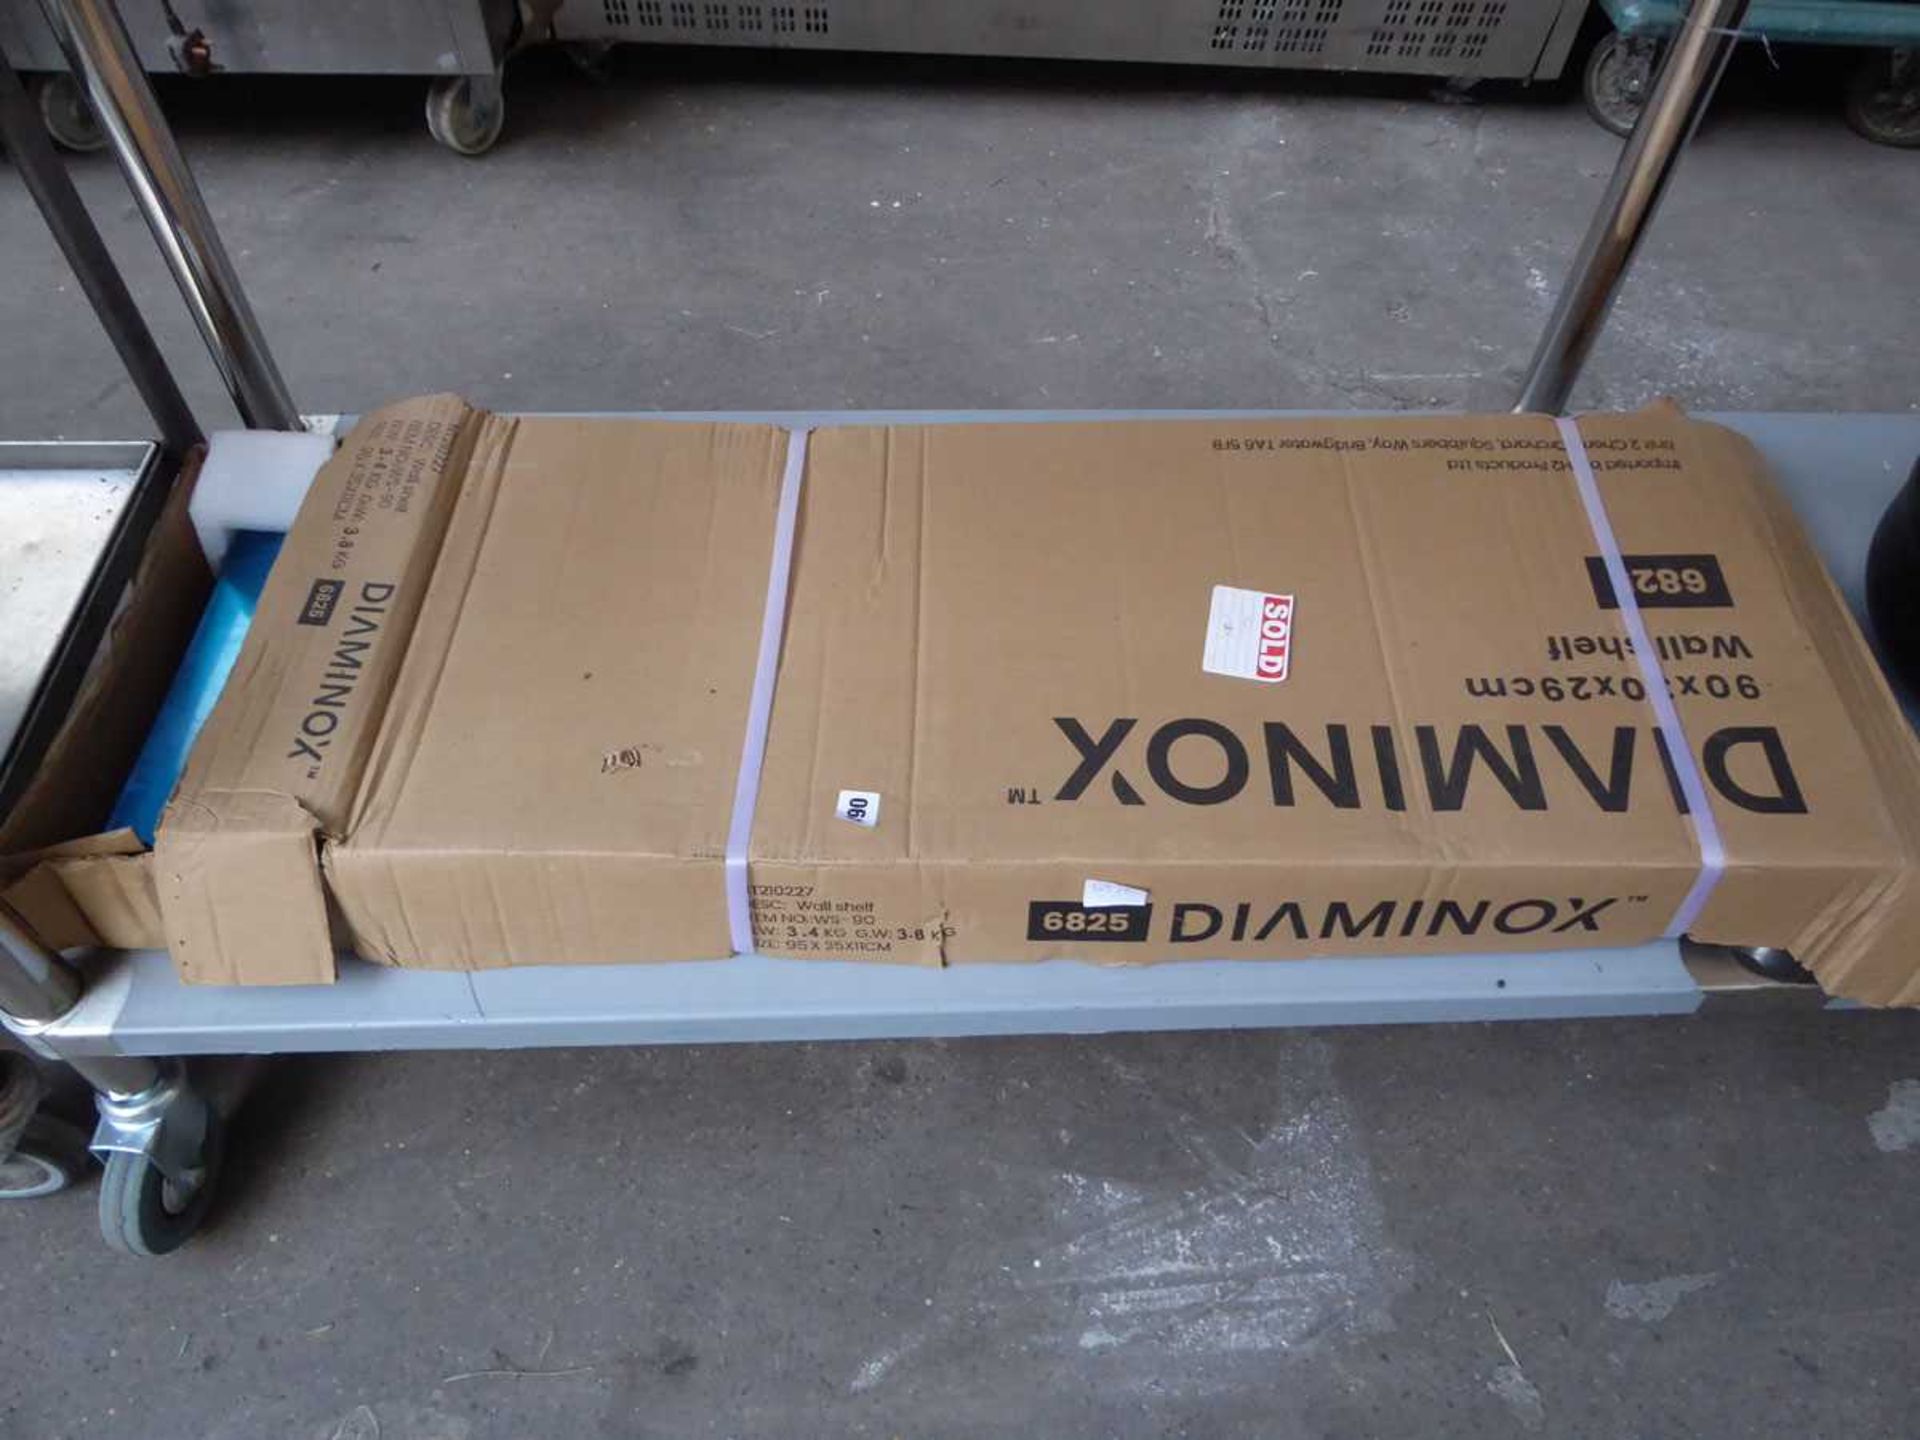 +VAT Diaminox wall mount stainless steel shelf